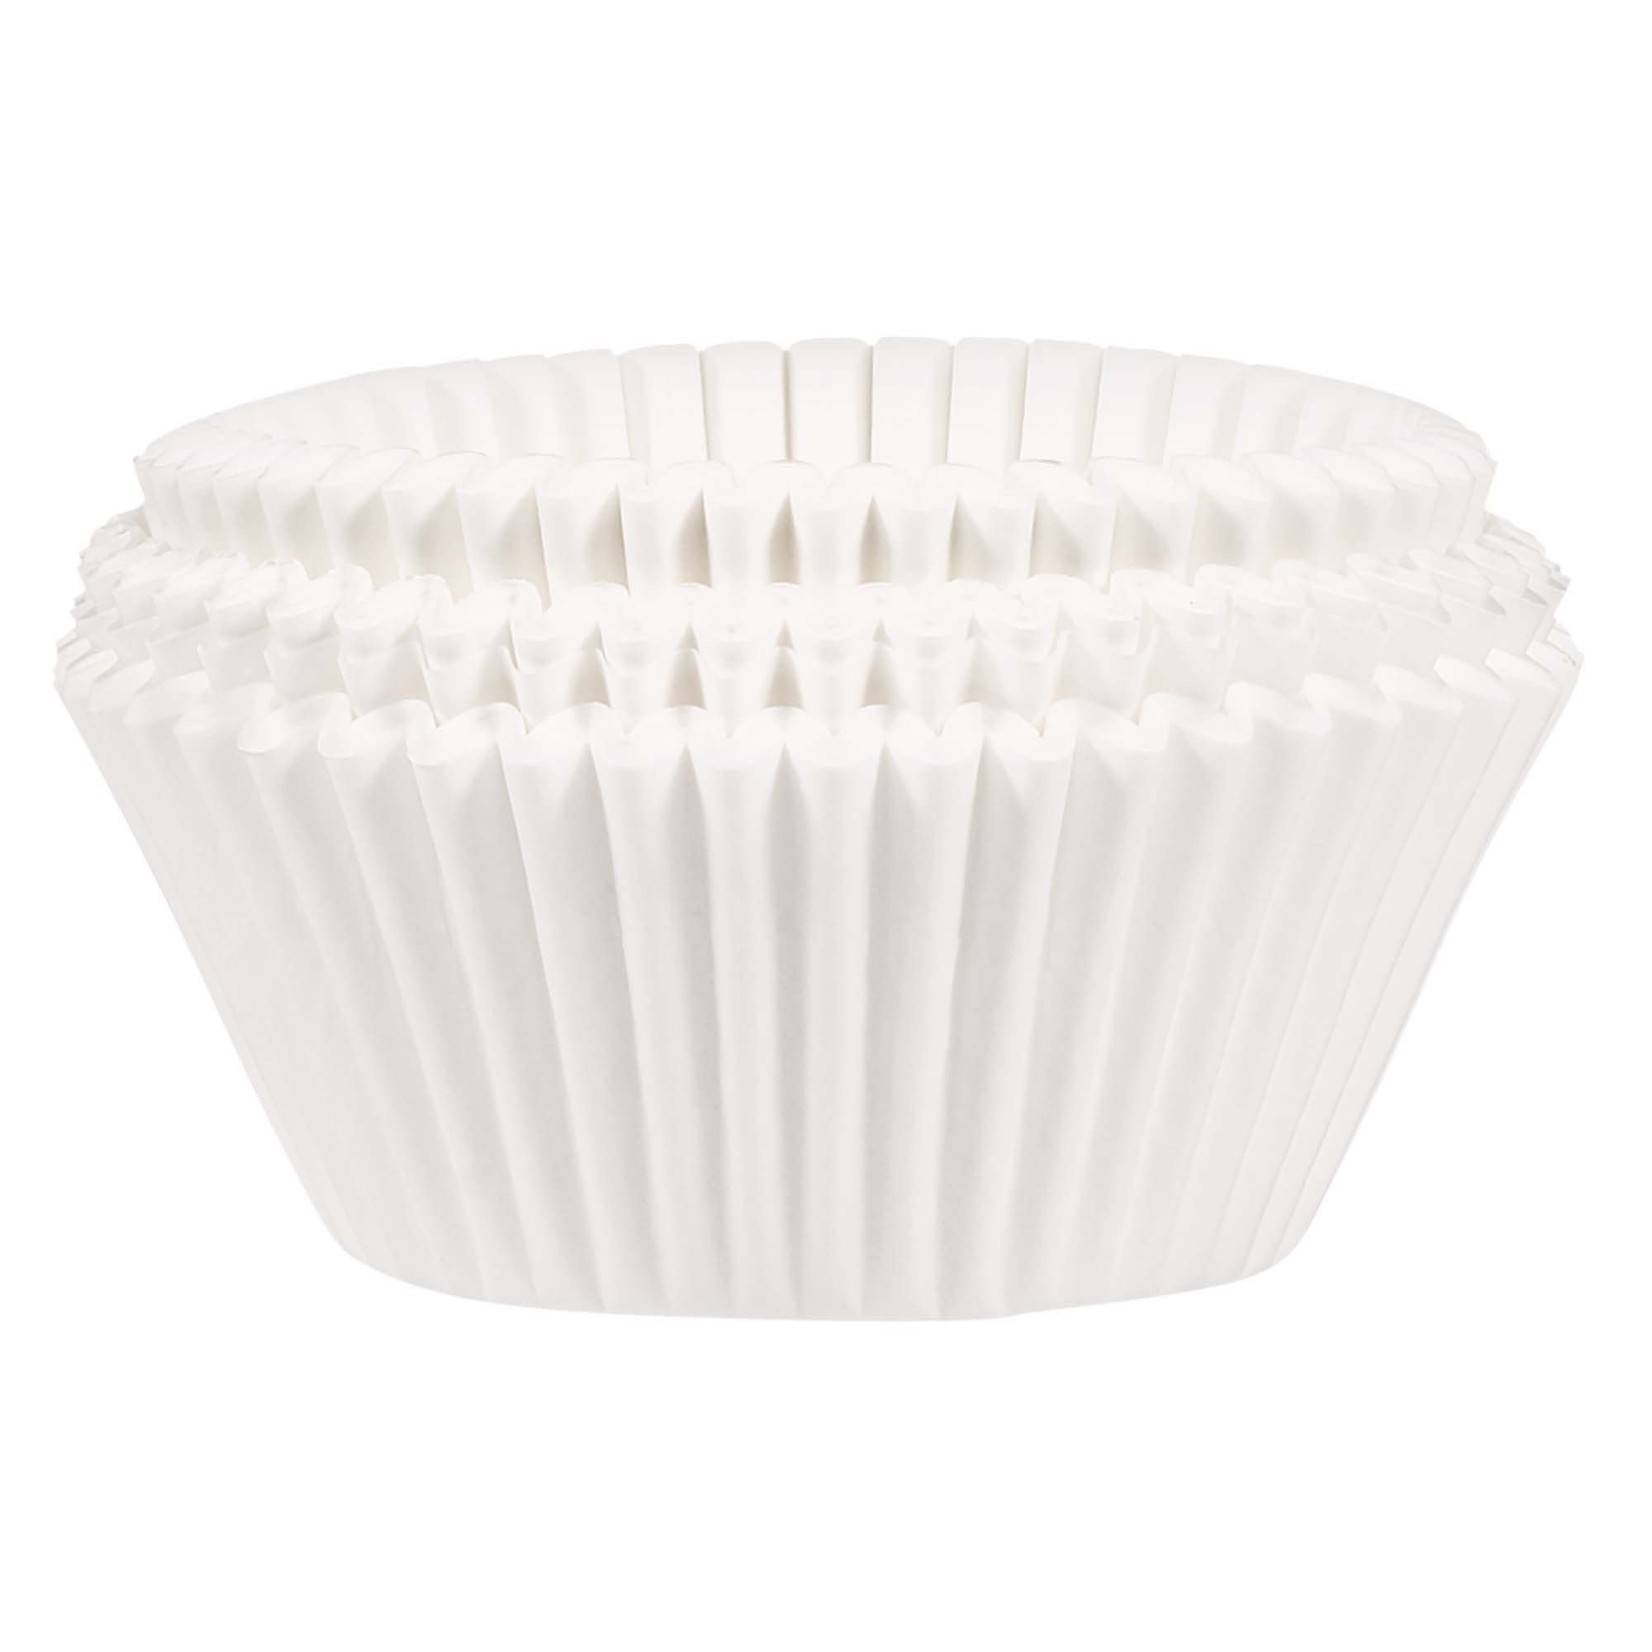 Amscan 2" White Baking Cups - 75ct.